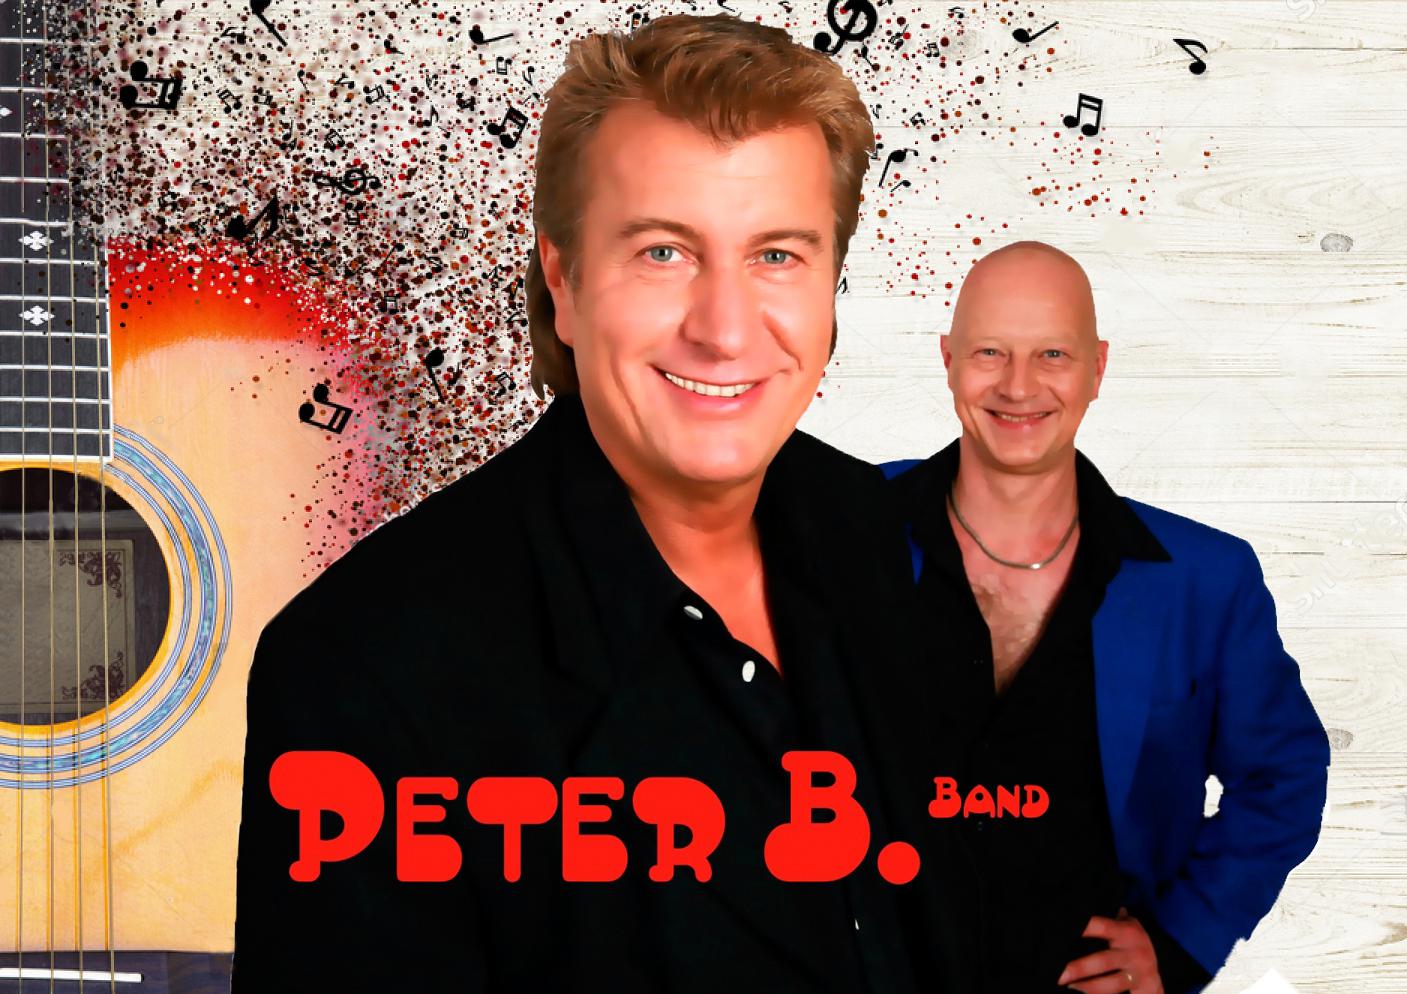 Peter-B. Band